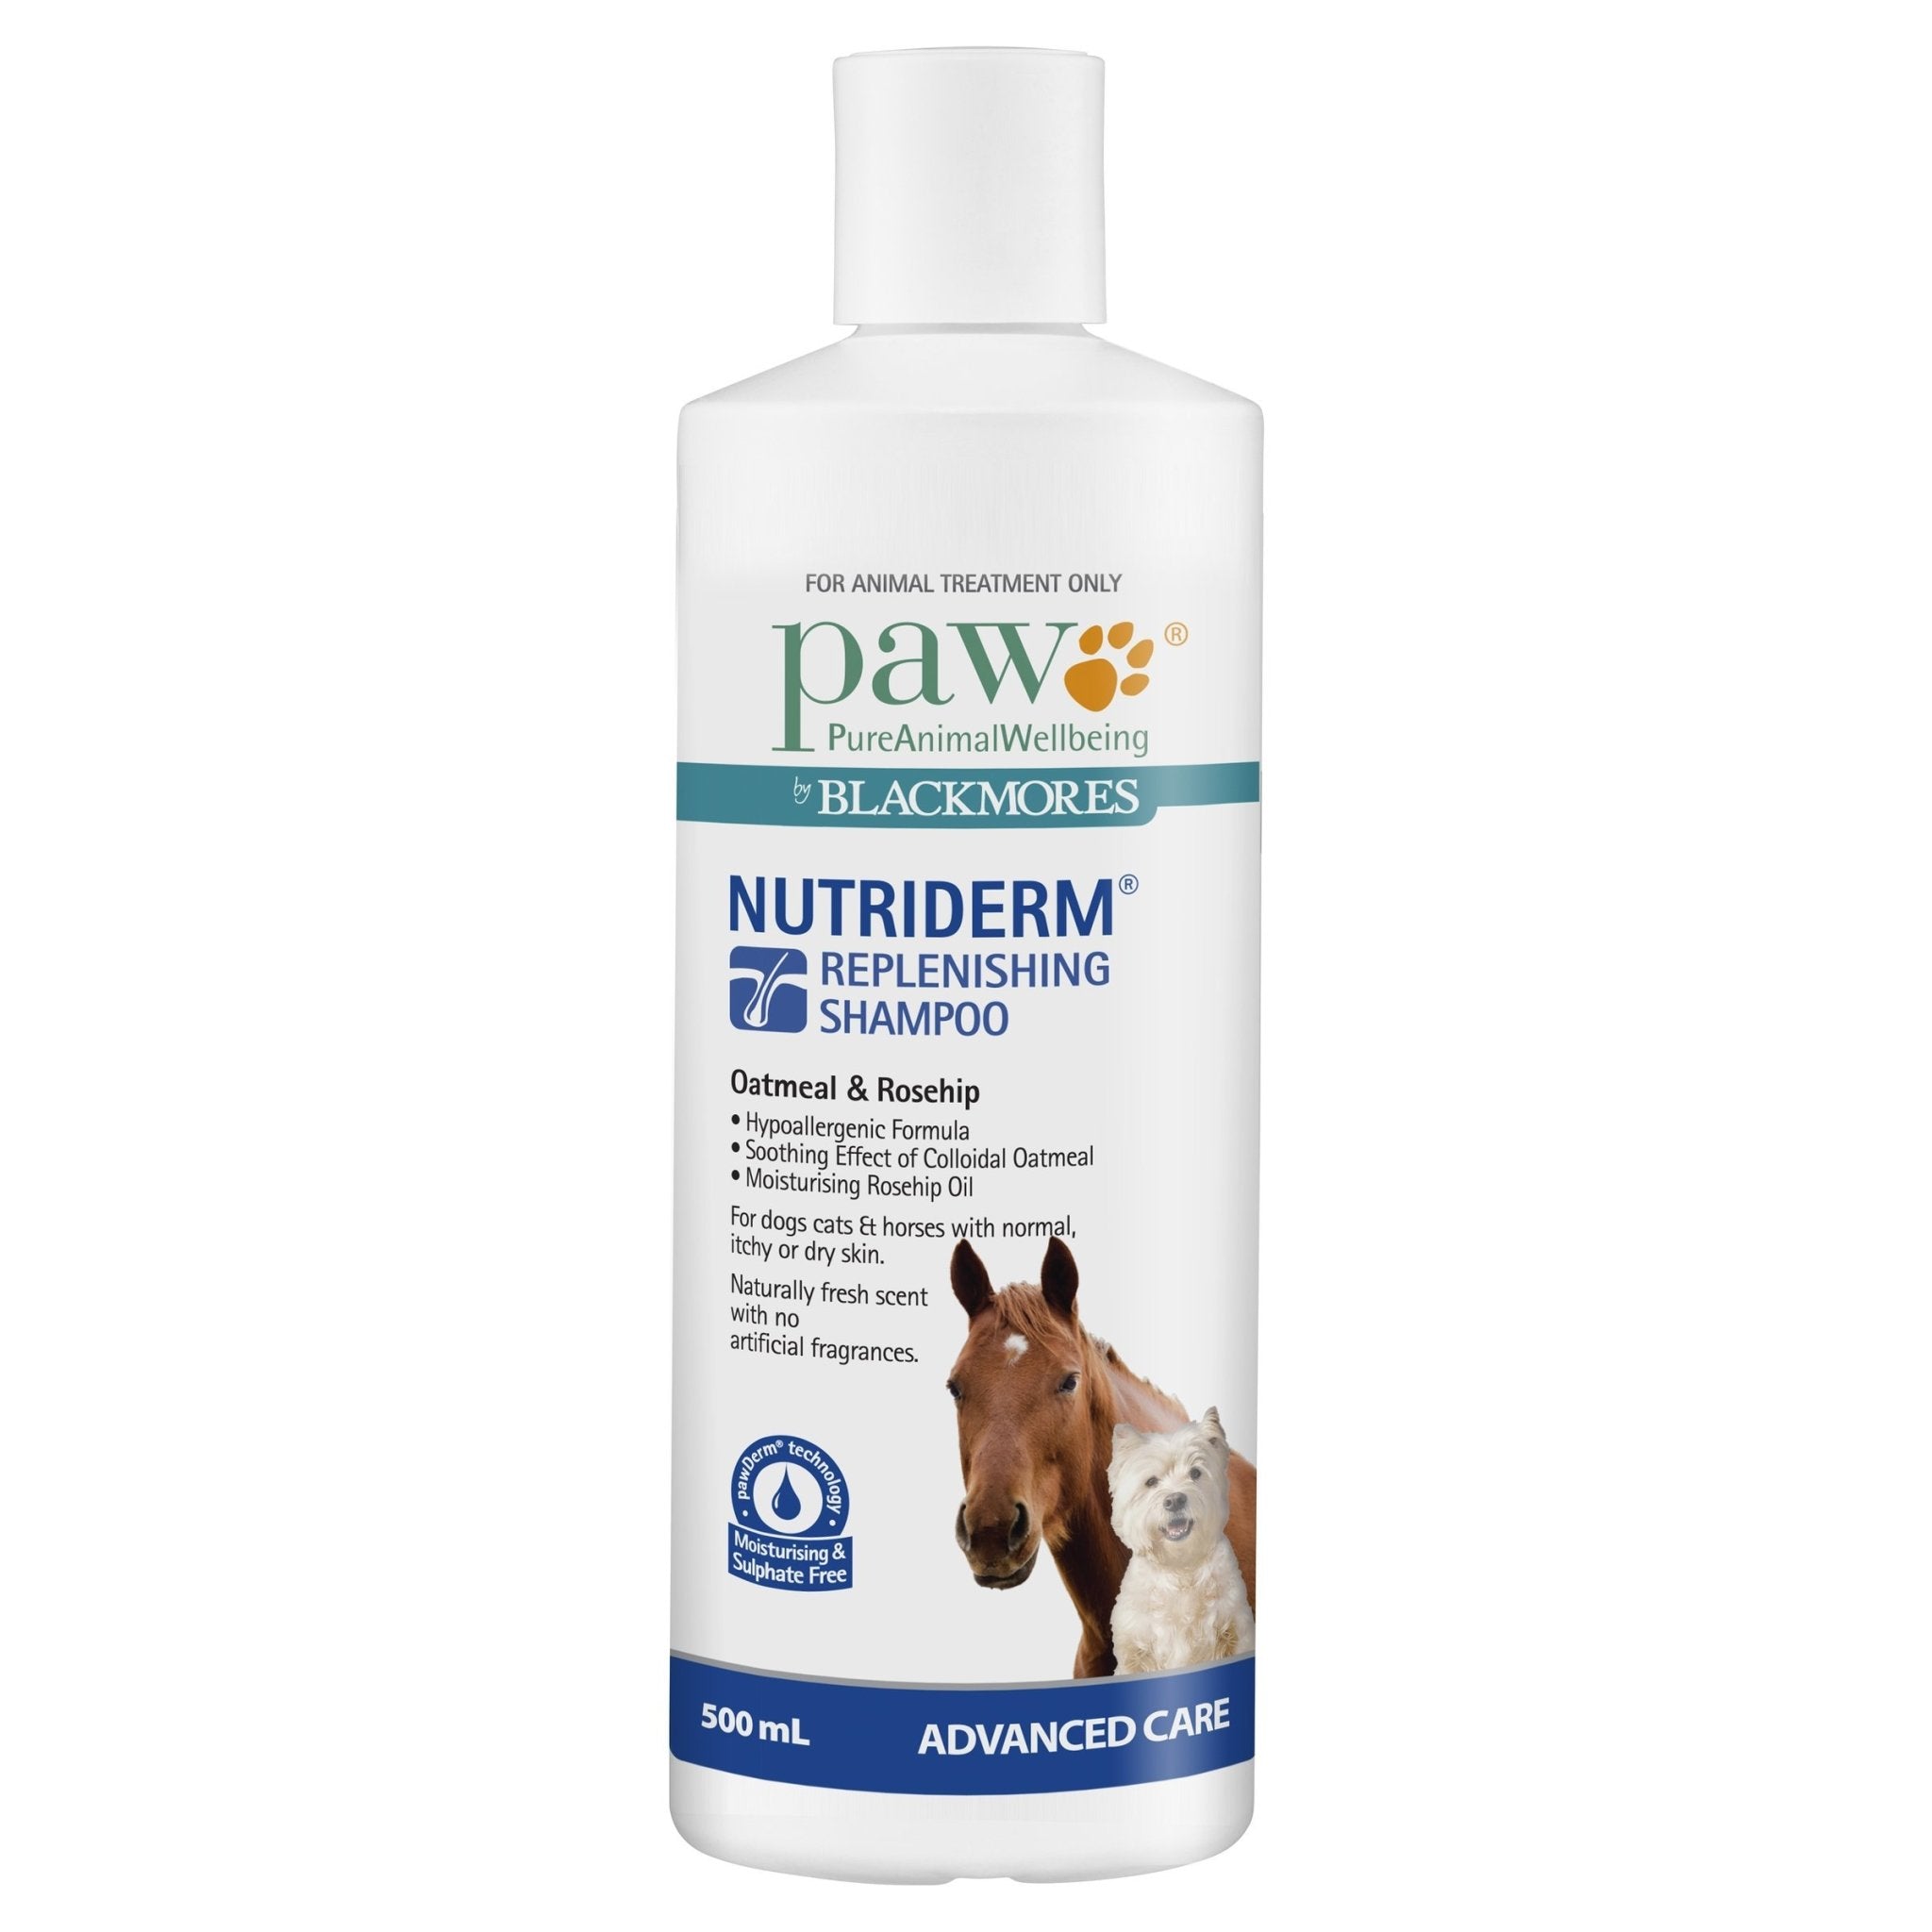 PAW Nutriderm® Replenishing Shampoo